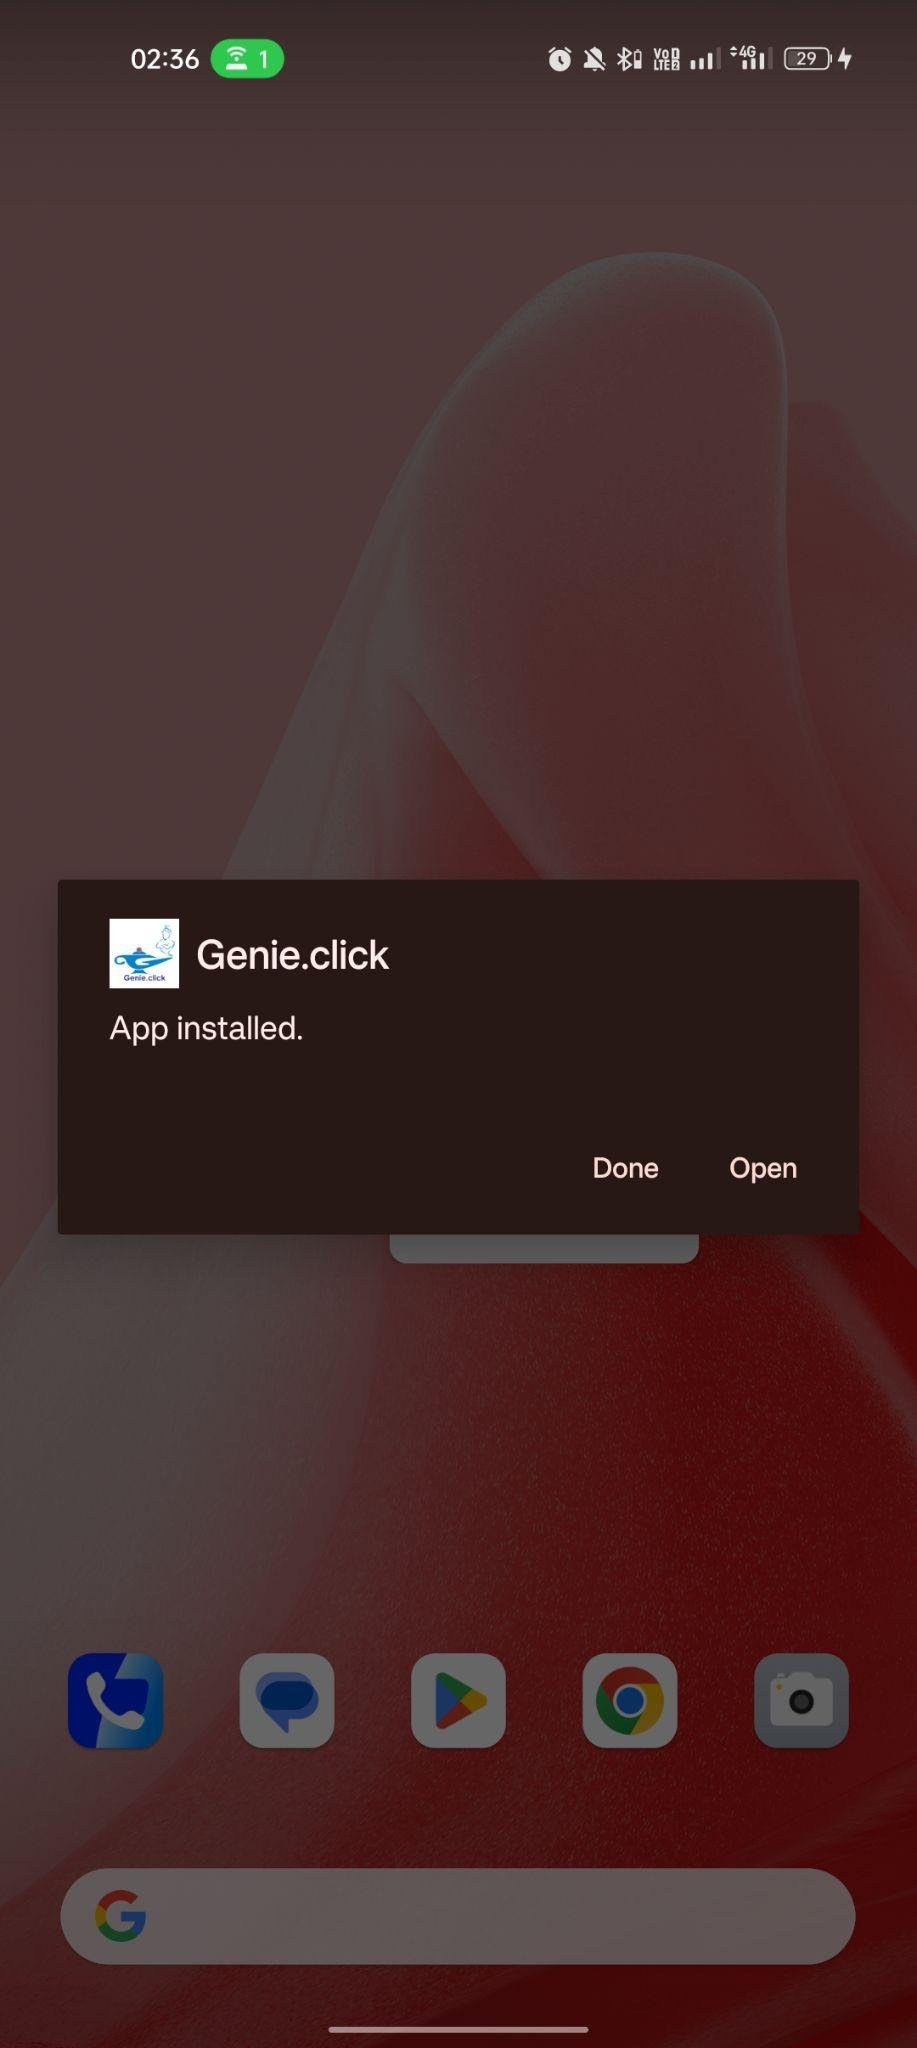 Genie.click apk installed